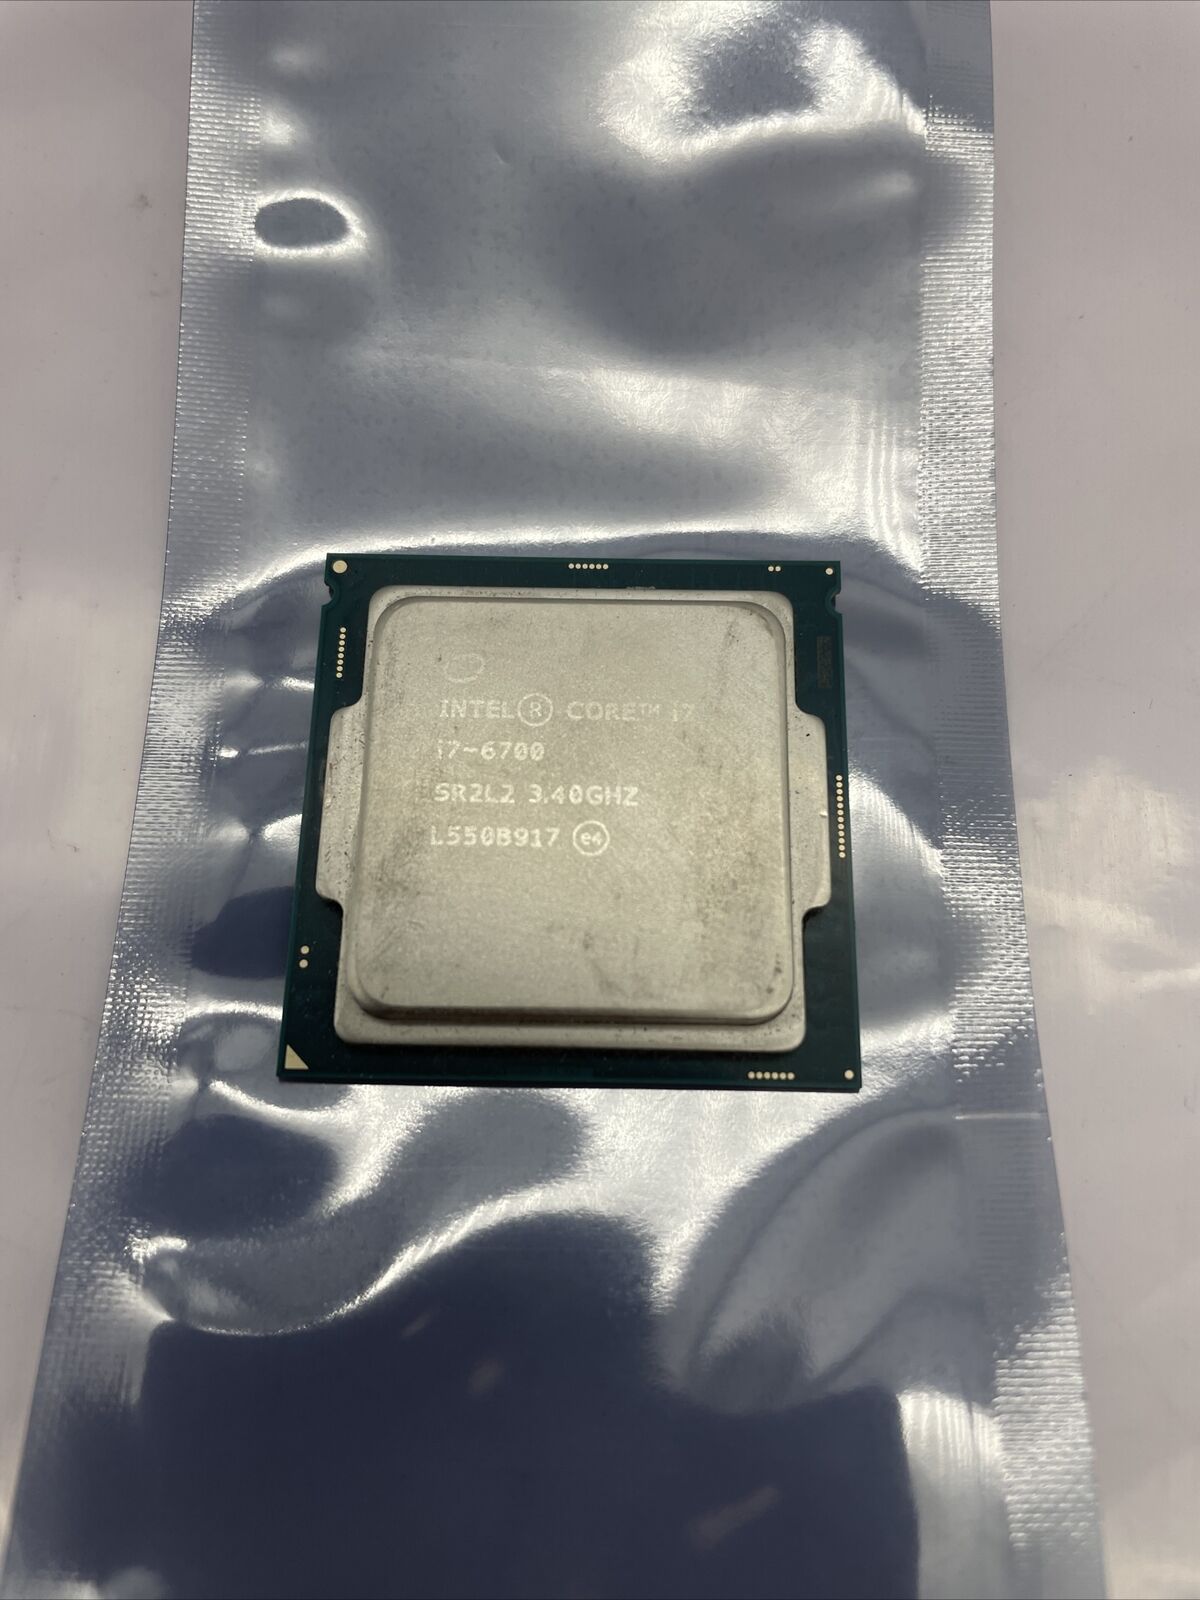 Intel Core i7-6700 @ 3.40GHz - LGA 1151  Desktop CPU Processor